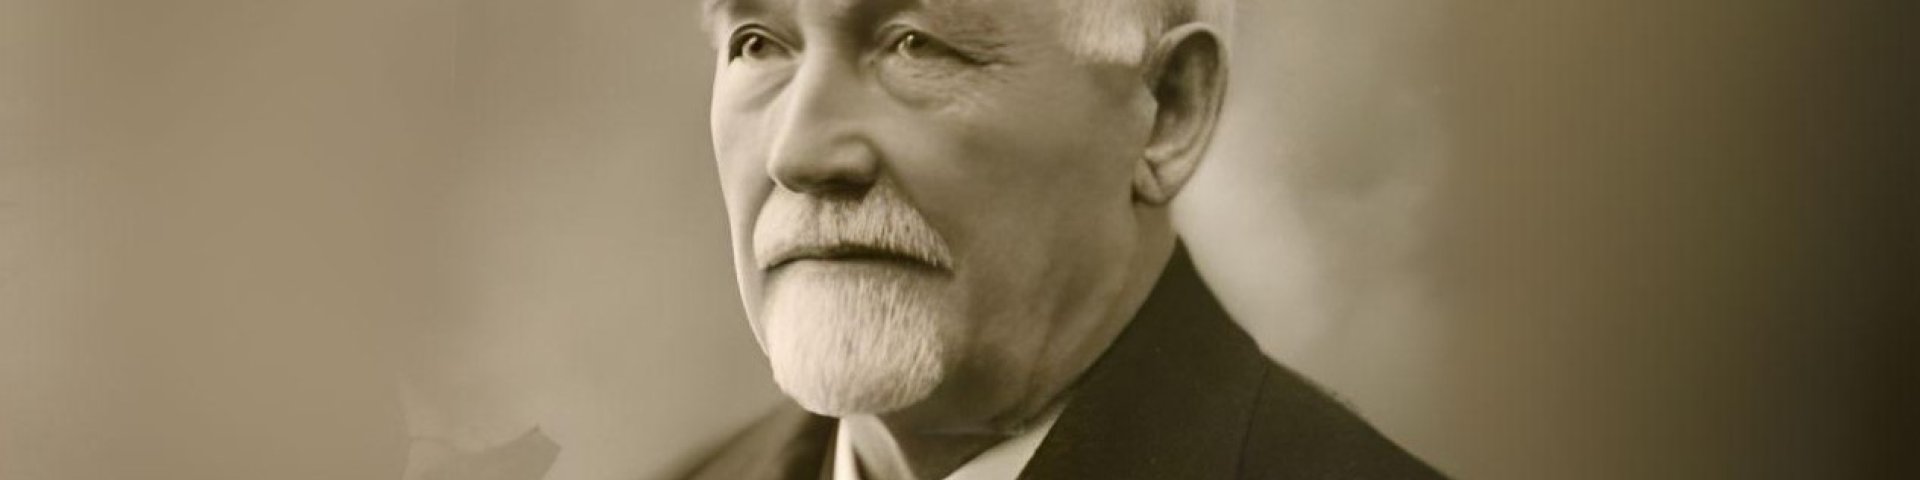 Rektor Henrik Koppel